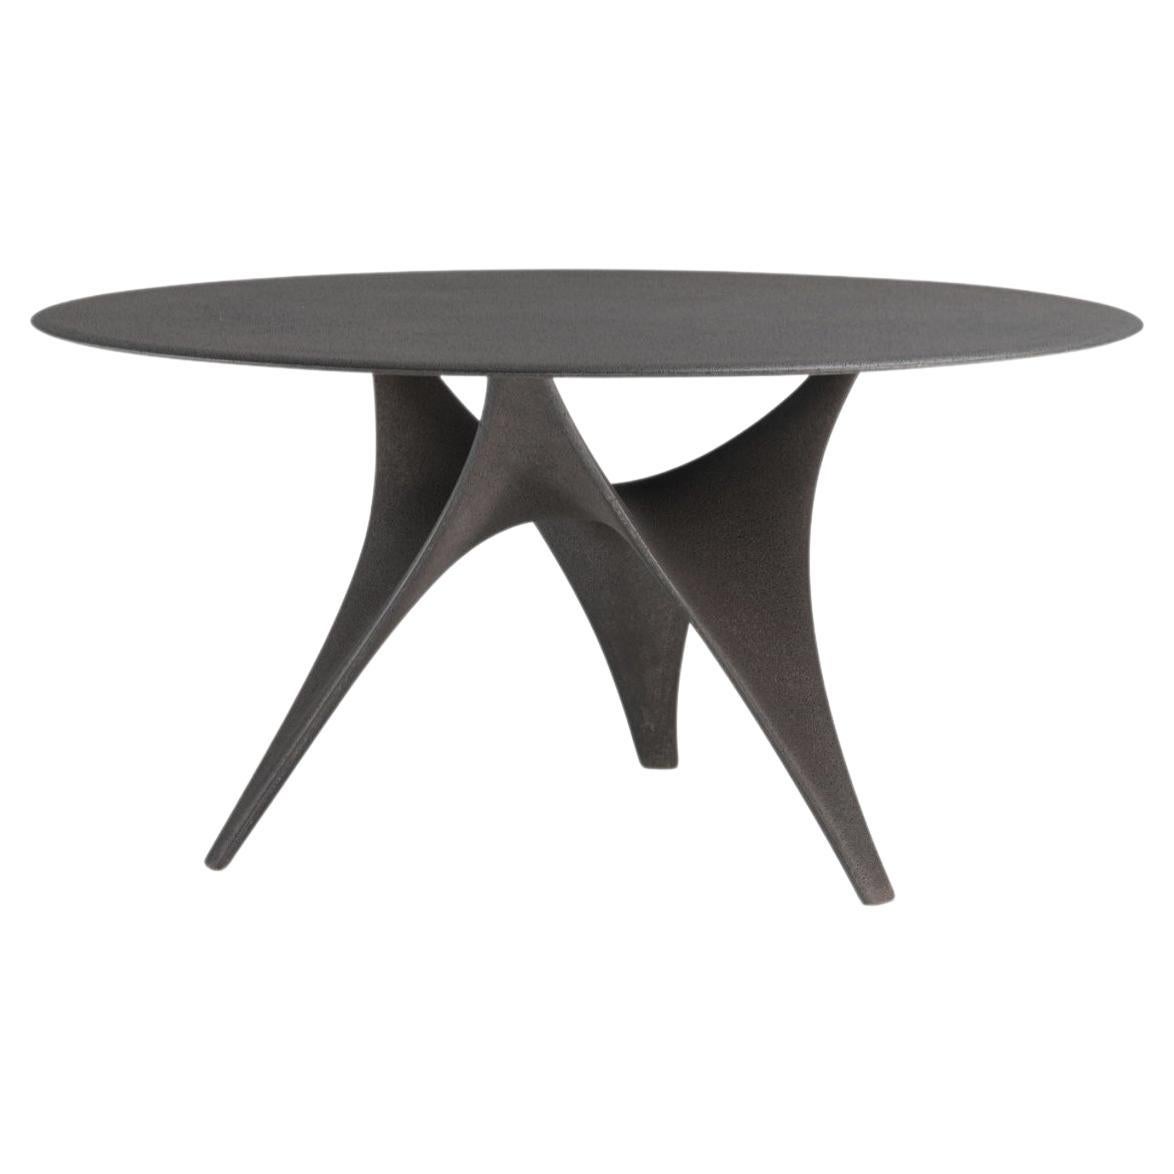 Table d'extérieur en ciment gris Molteni&C by Foster + Partners Made in Italy